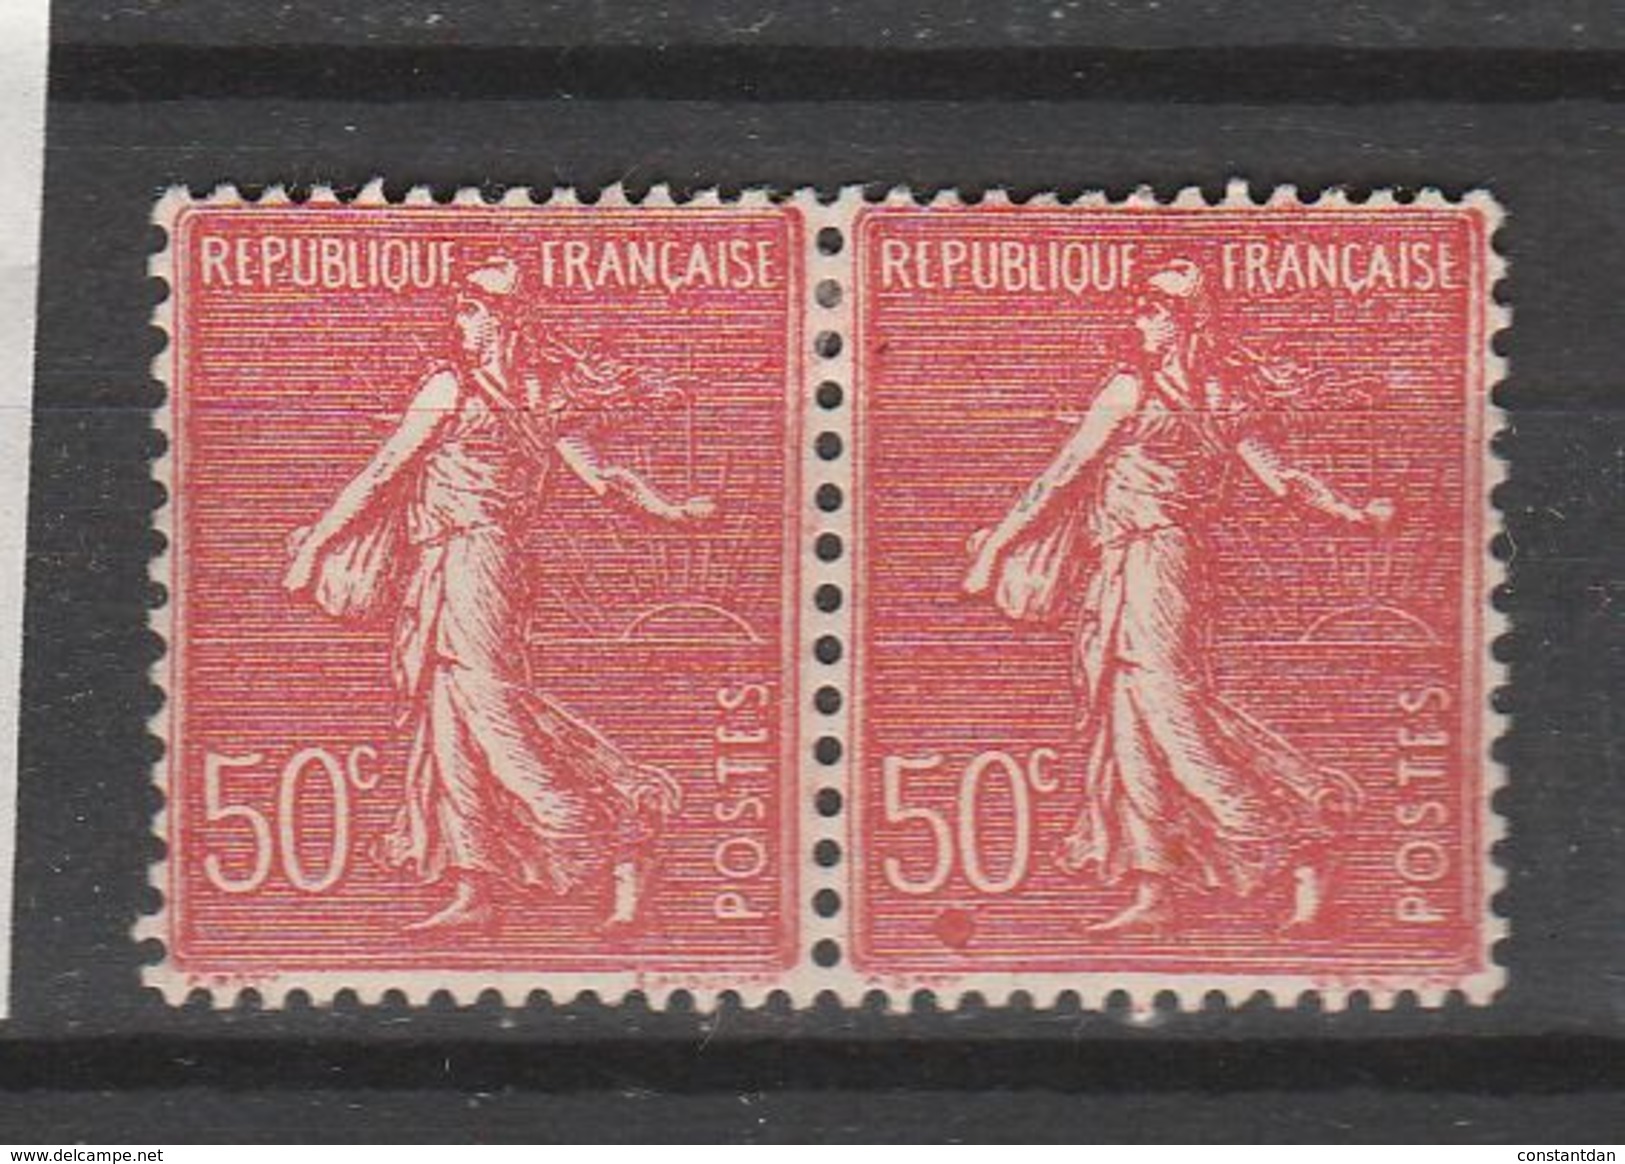 FRANCE N° 199 50C ROUGE TYPE SEMEUSE LIGNEE POINT ROUGE SOUS LE 50C DU TIMBRE A DROITE NEUF AVEC CHARNIERE - Unused Stamps